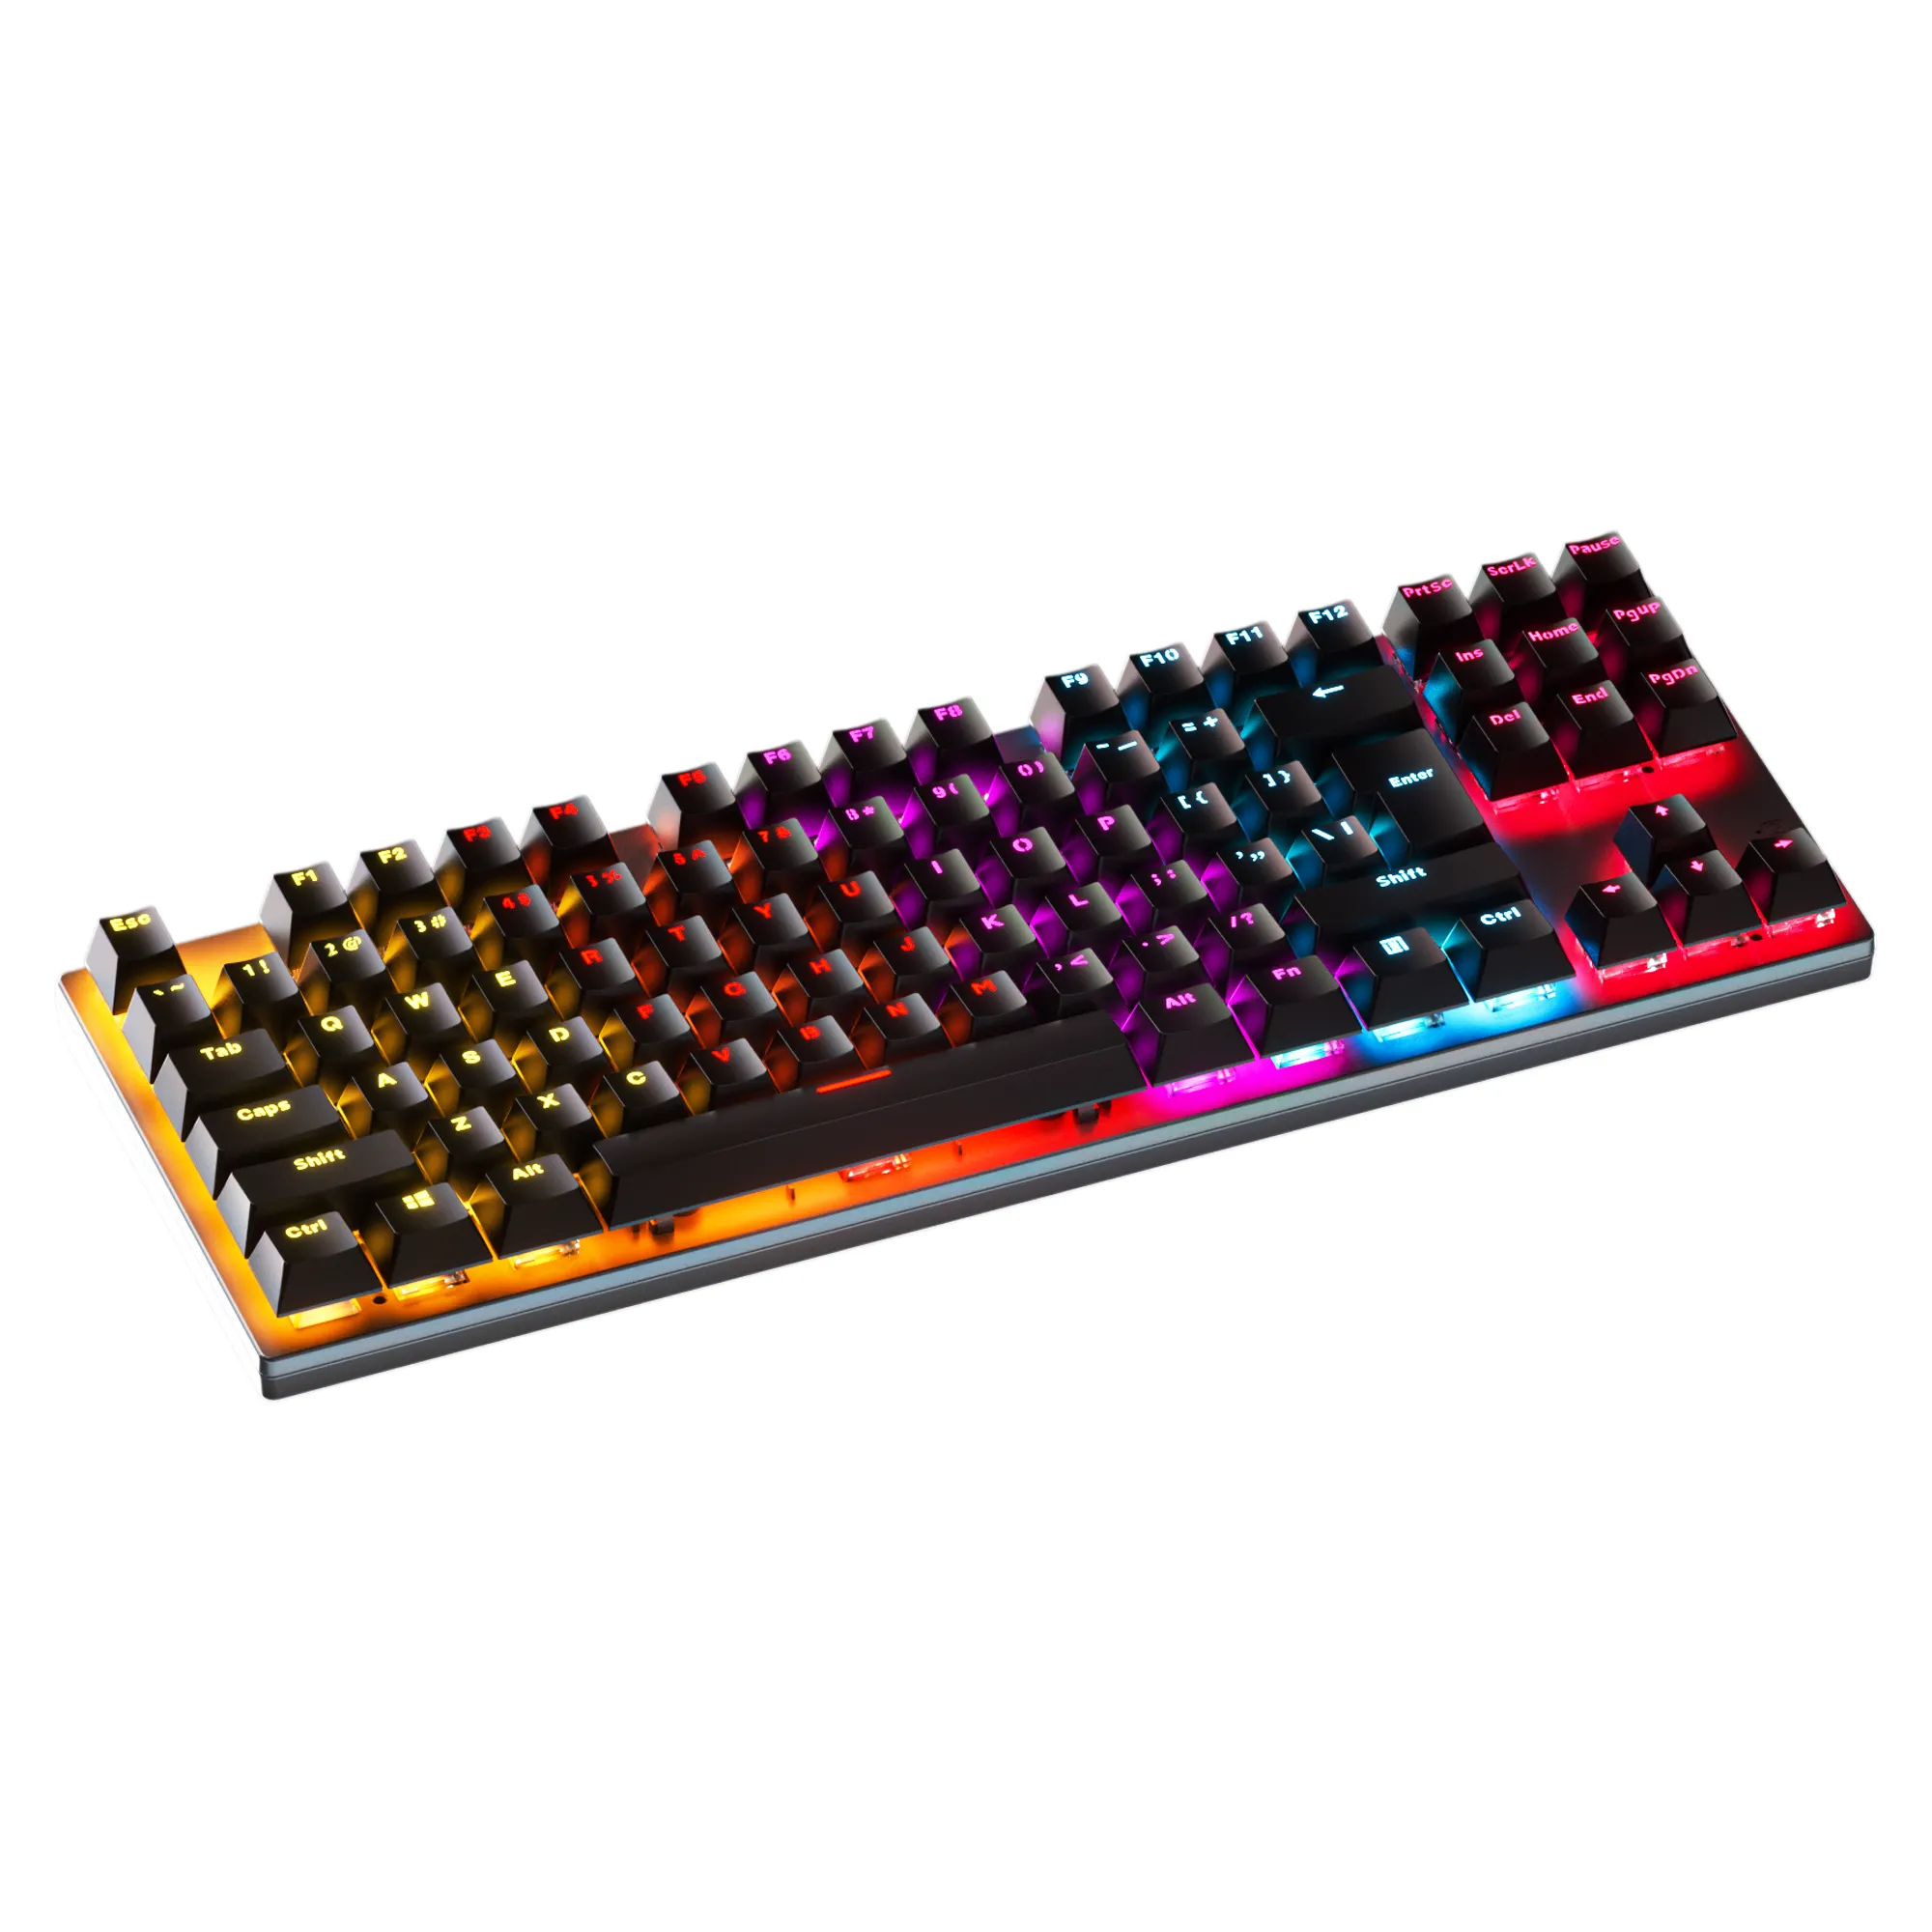 Ergonomic 87 keys Layout Mechanical Feel Gaming Keyboards Pc Accessories Laptop Wireless Gaming Keyboards